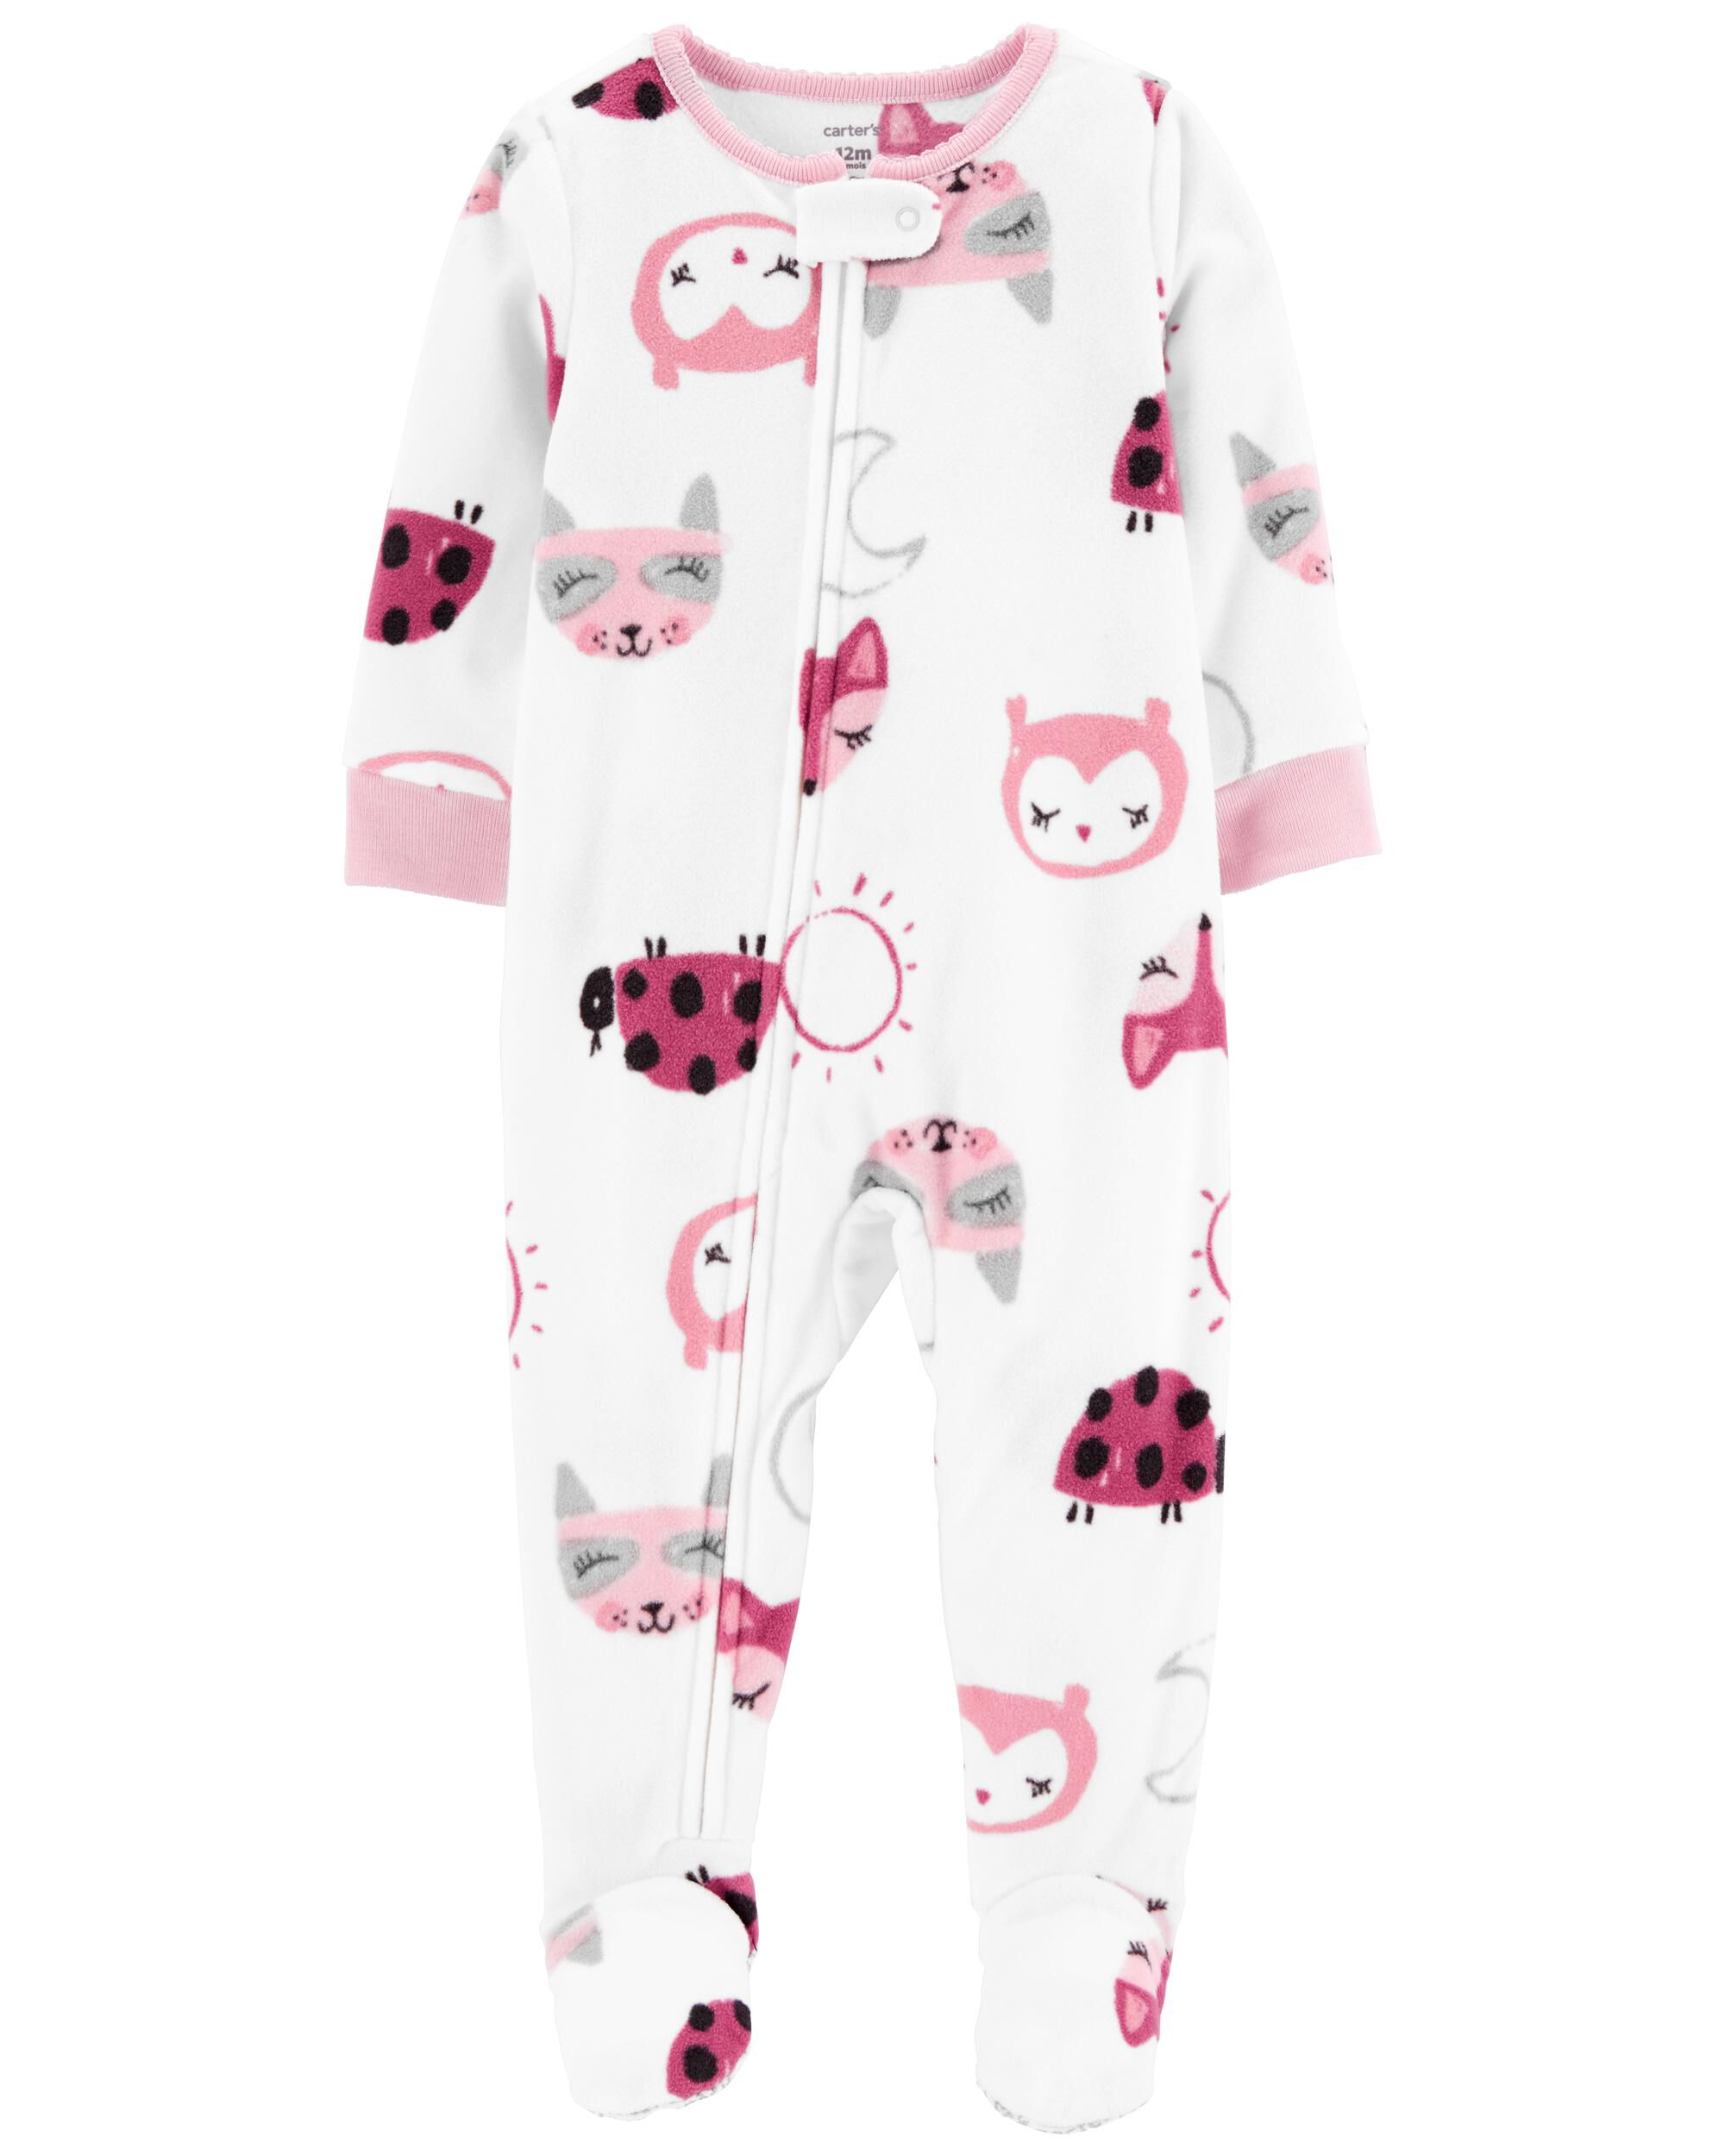 Details about   NWT Carters Girls 3T Scotty Dog Holiday Sleeper Fleece One Piece Zipper Pajamas 